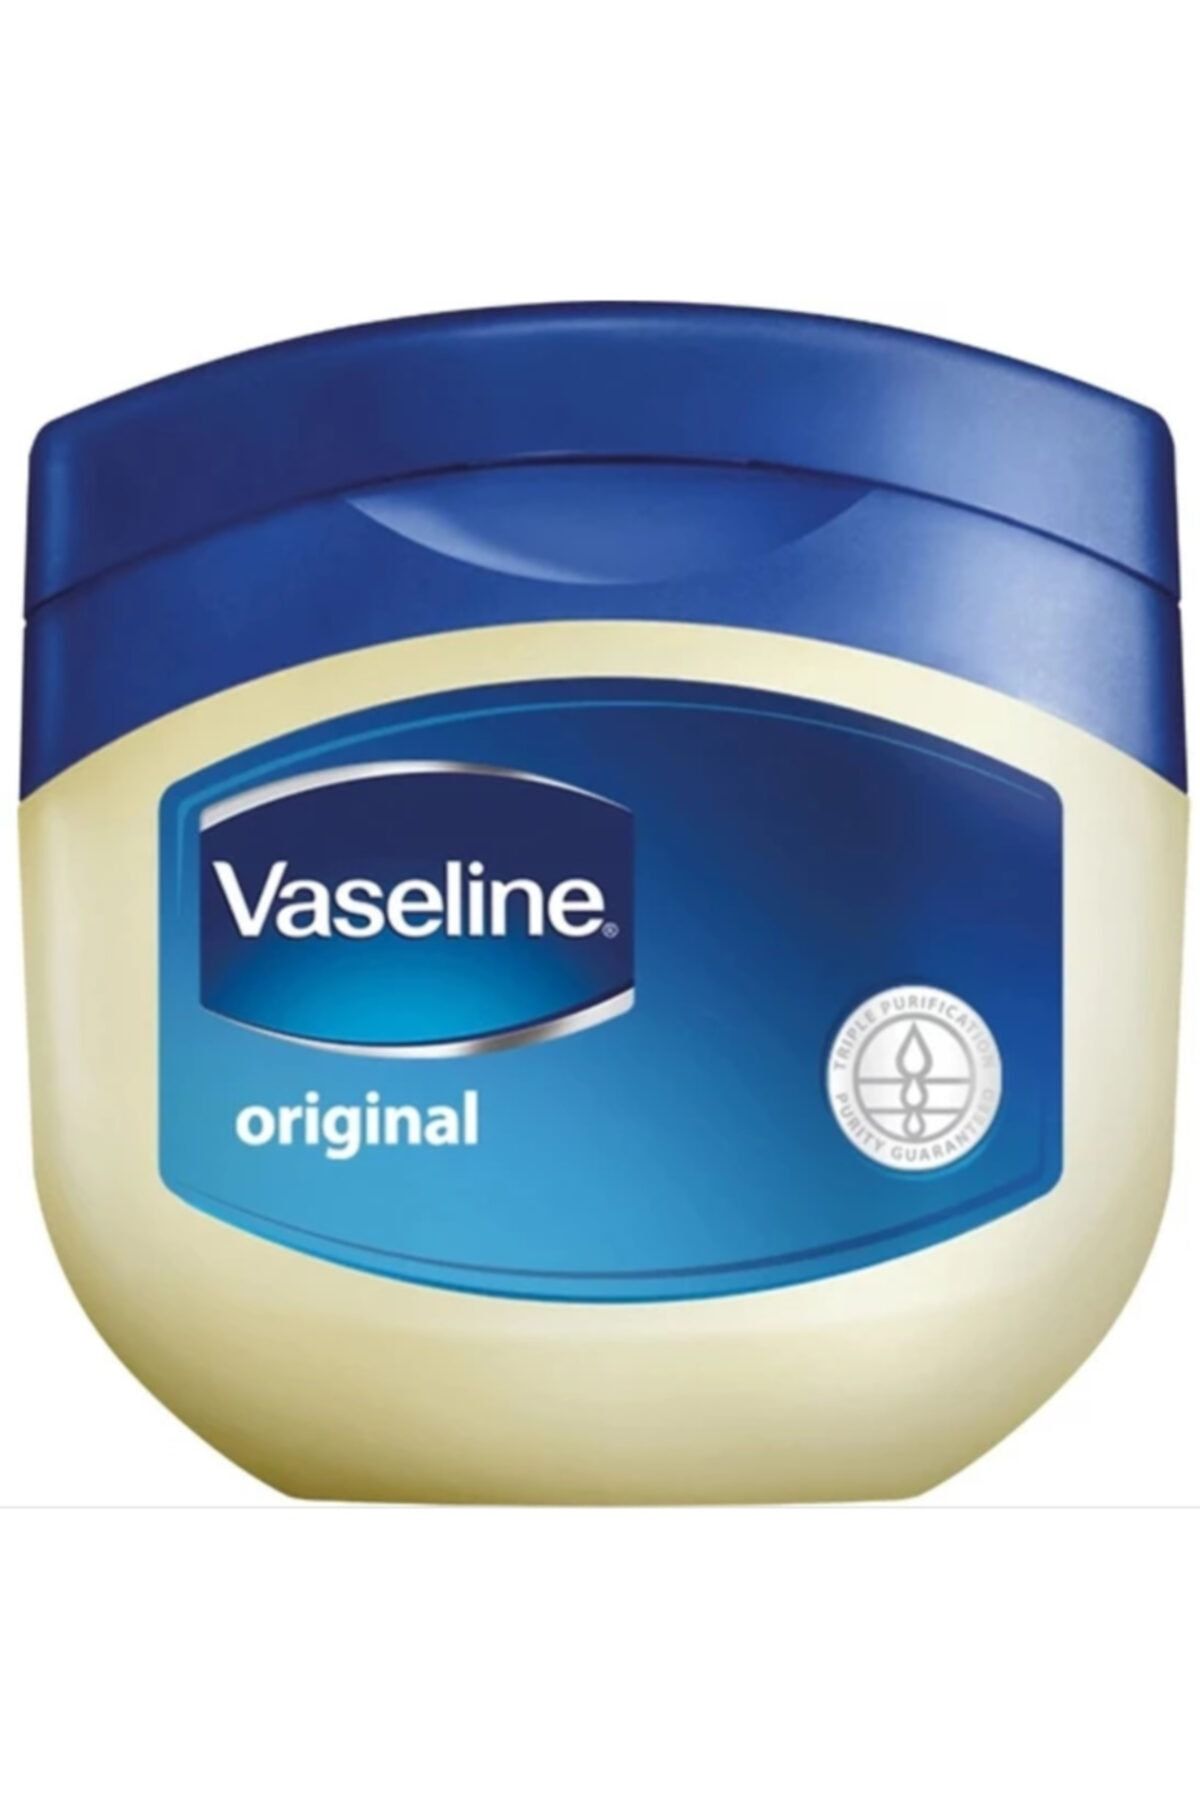 Vaseline Blueseal Vazalin Original 50 ml